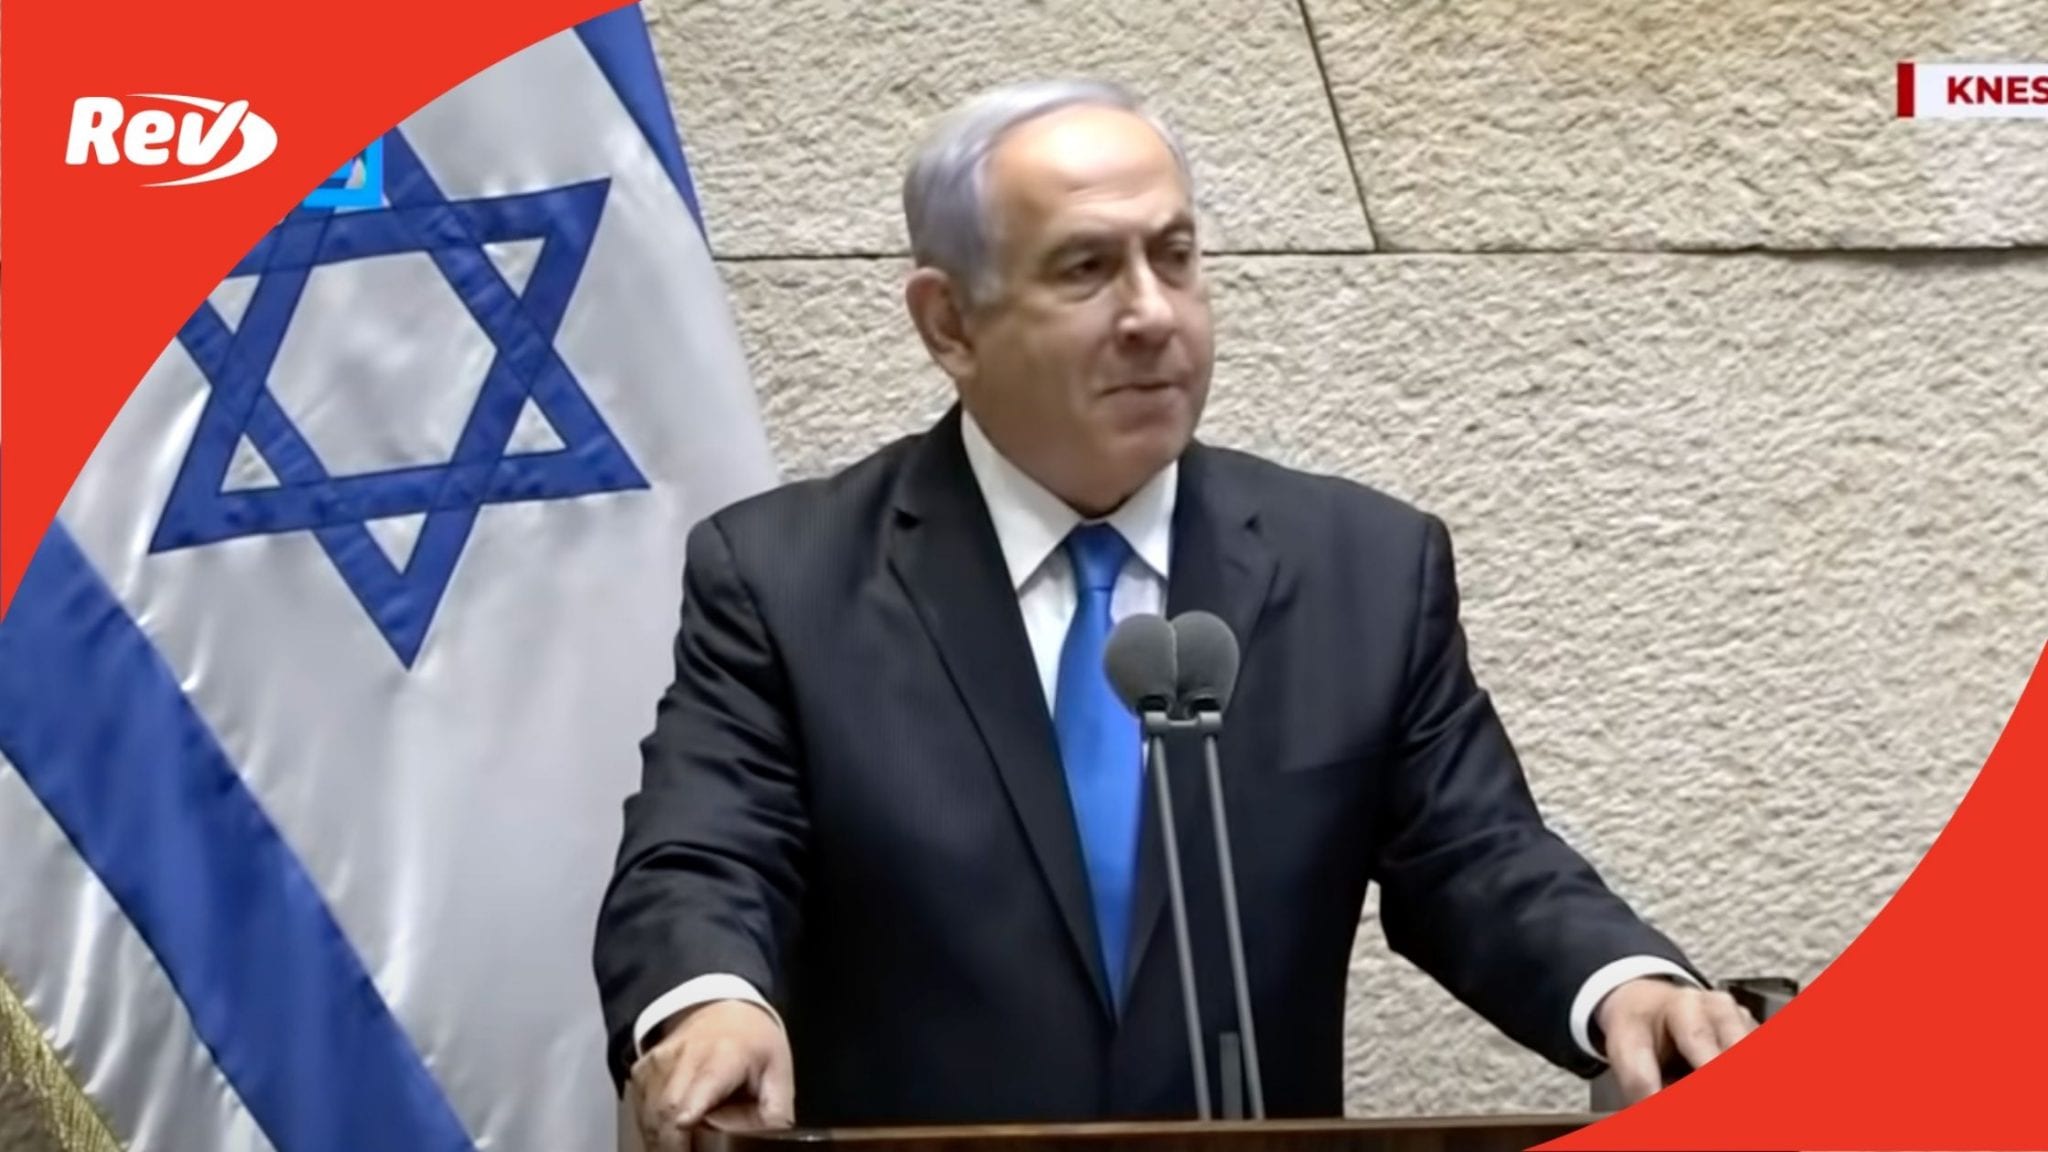 Netanyahu's Final Speech as Prime Minister of Israel